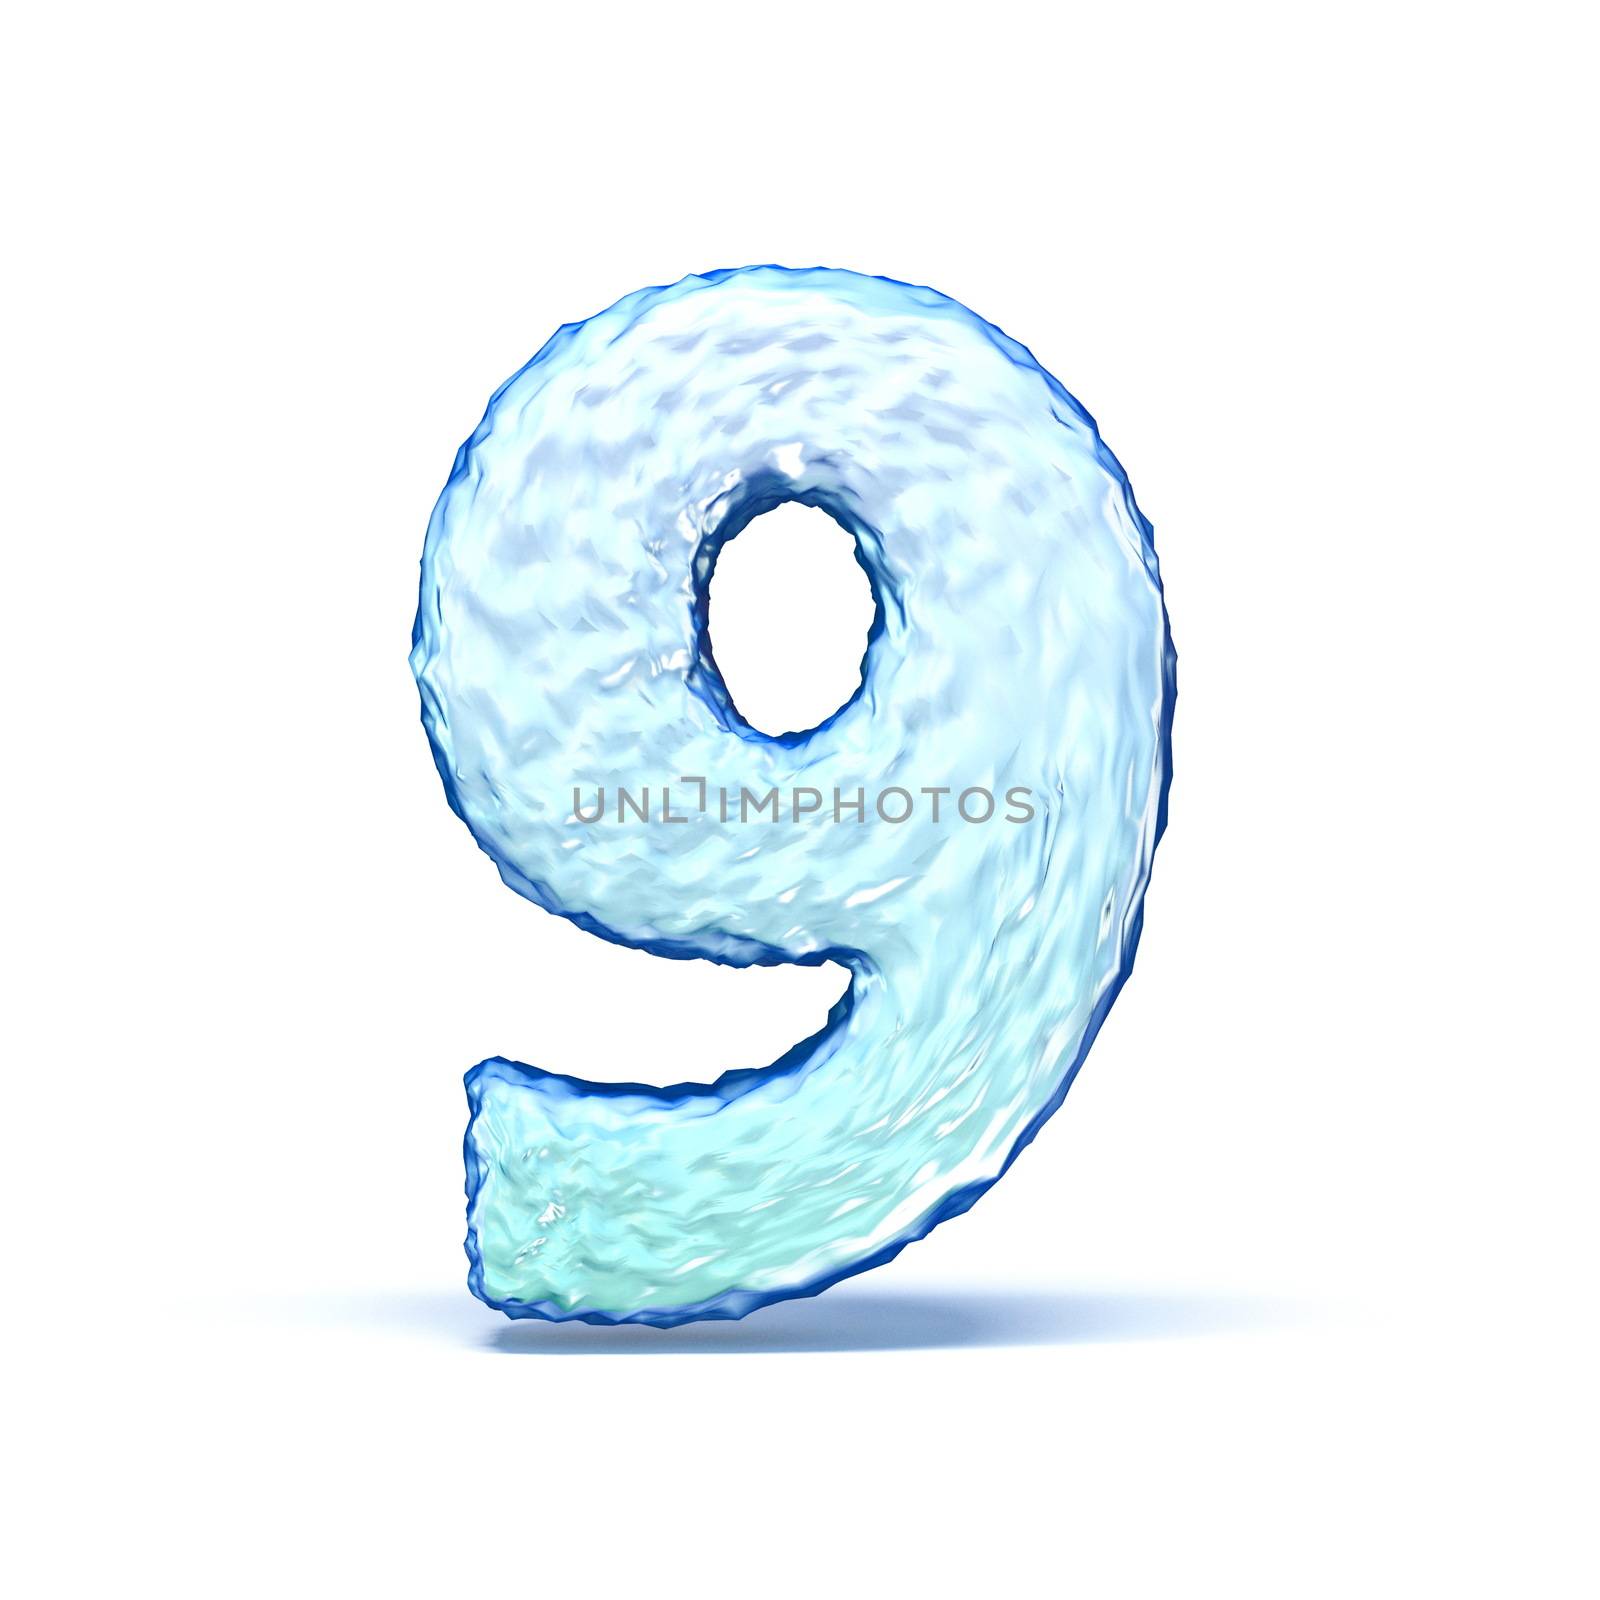 Ice crystal font Number 9 NINE 3D render illustration isolated on white background